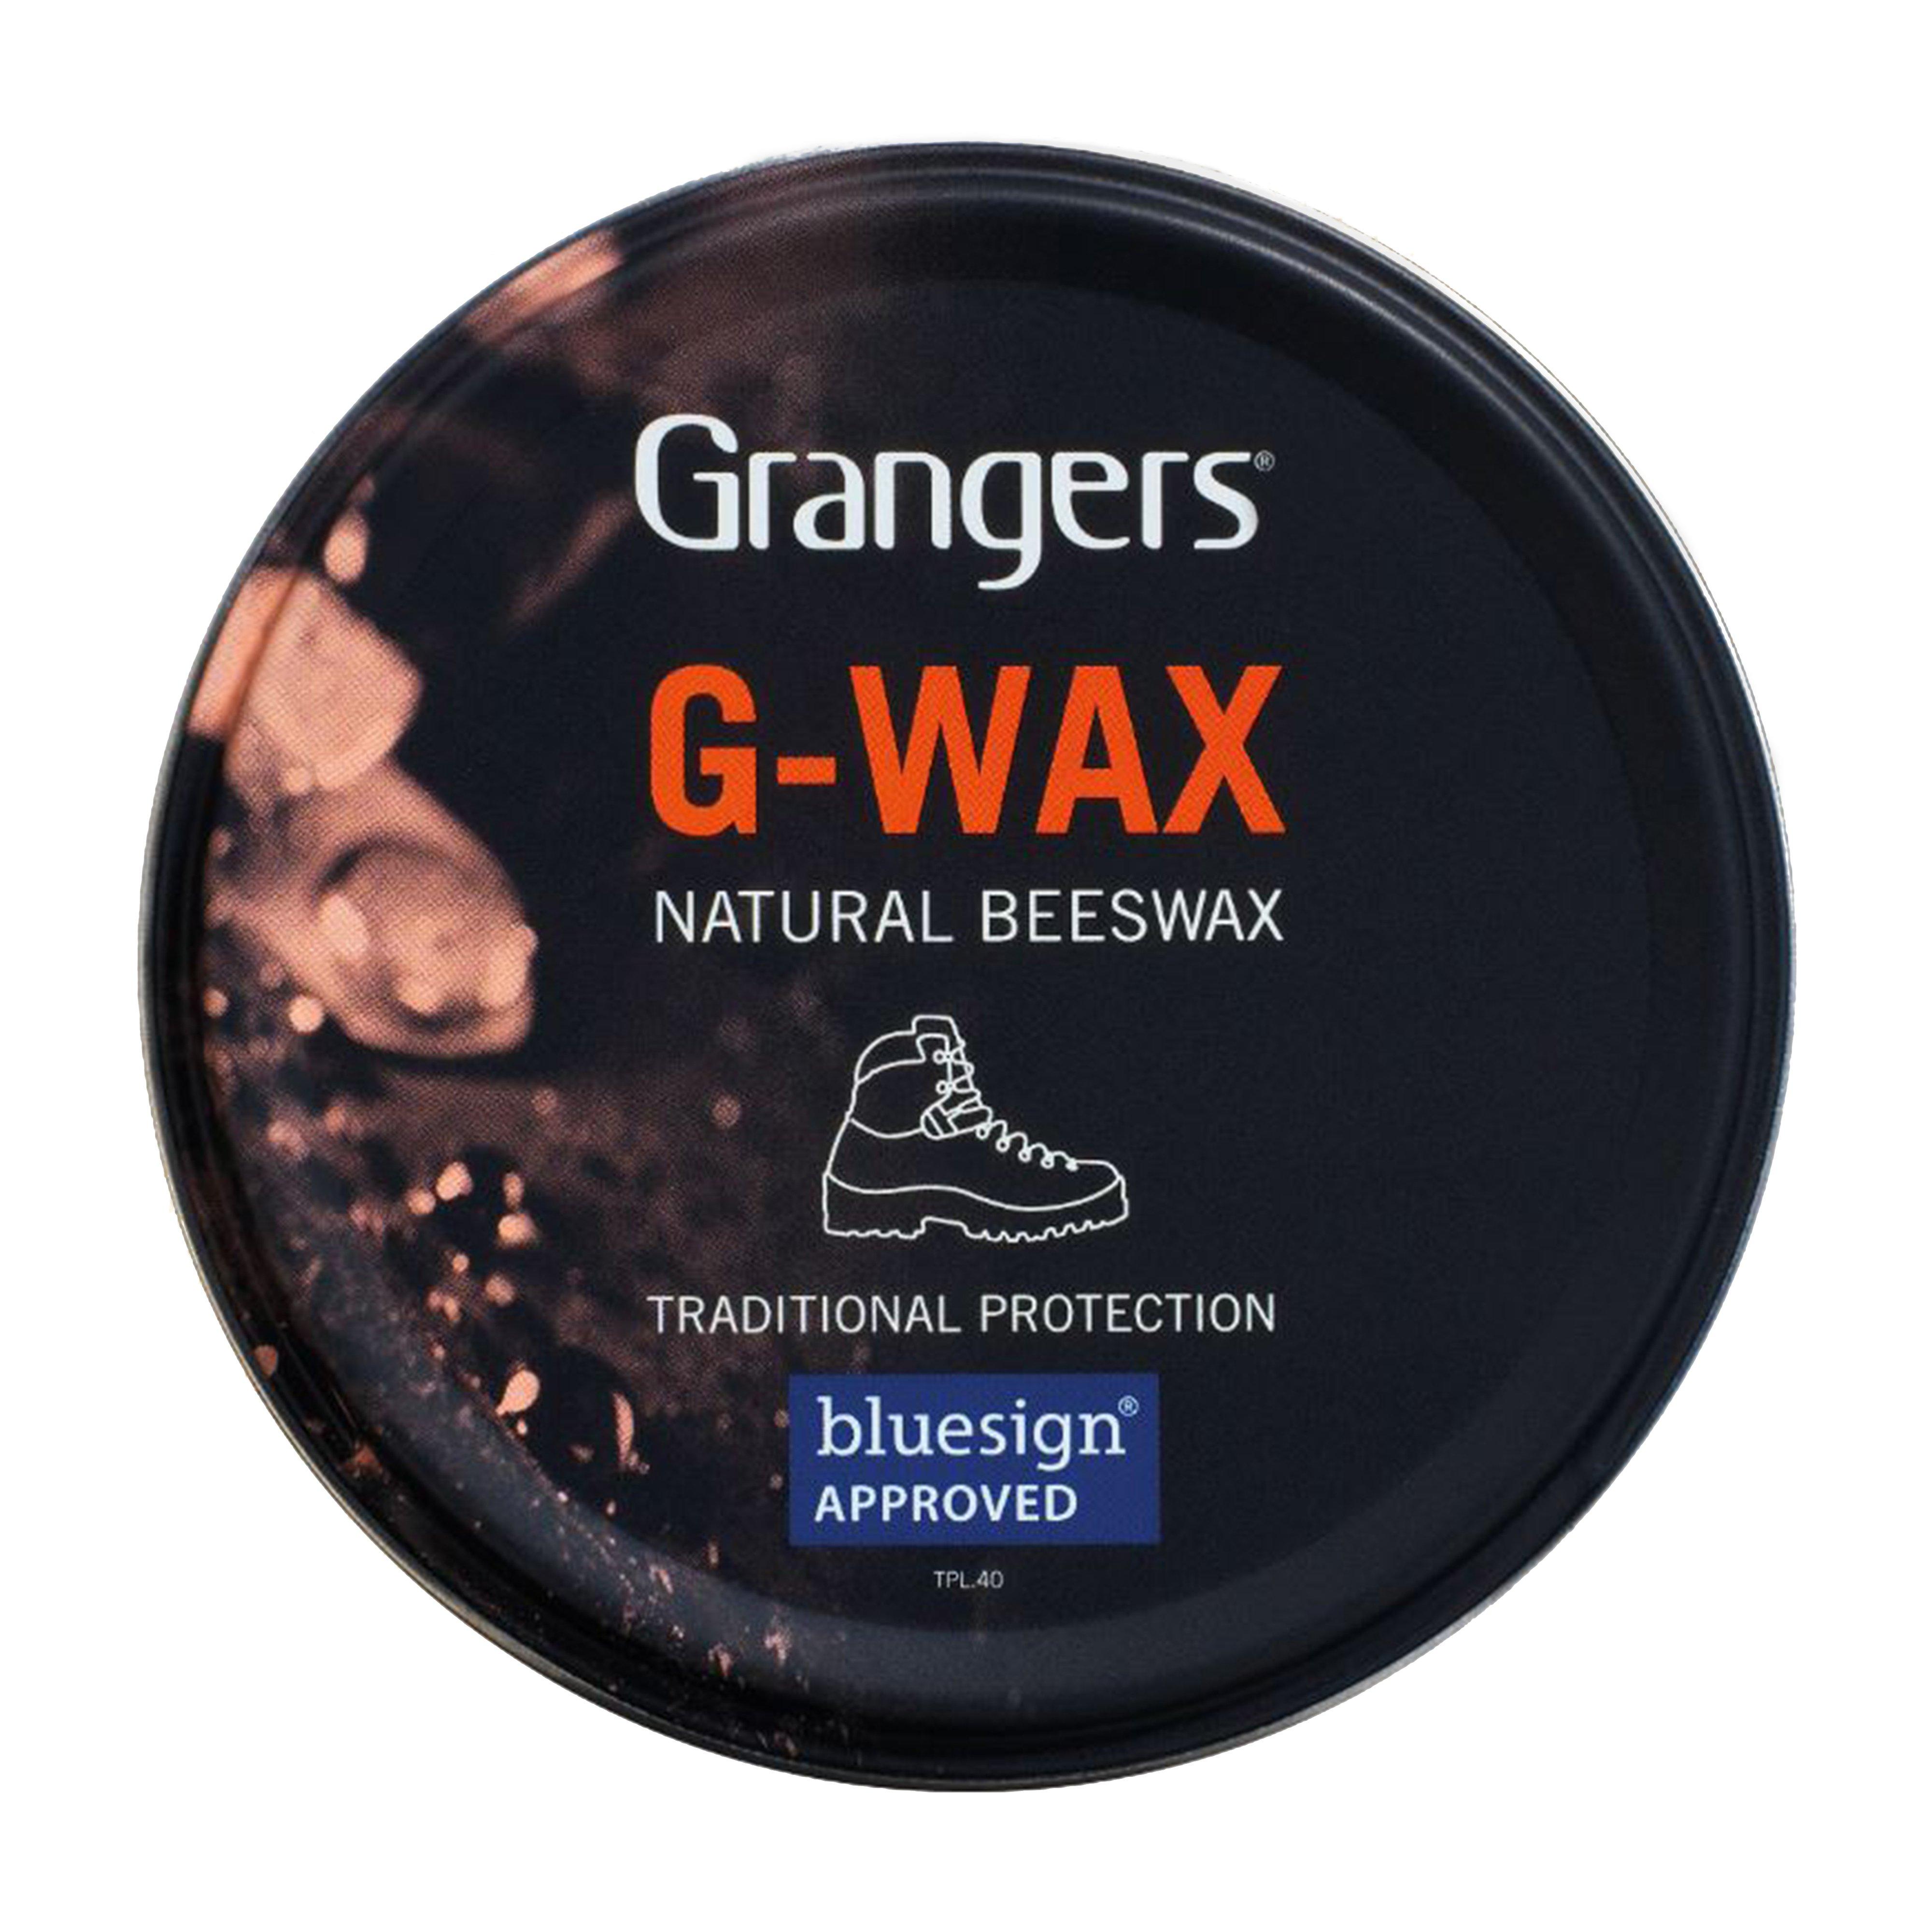 Grangers G-Wax Review